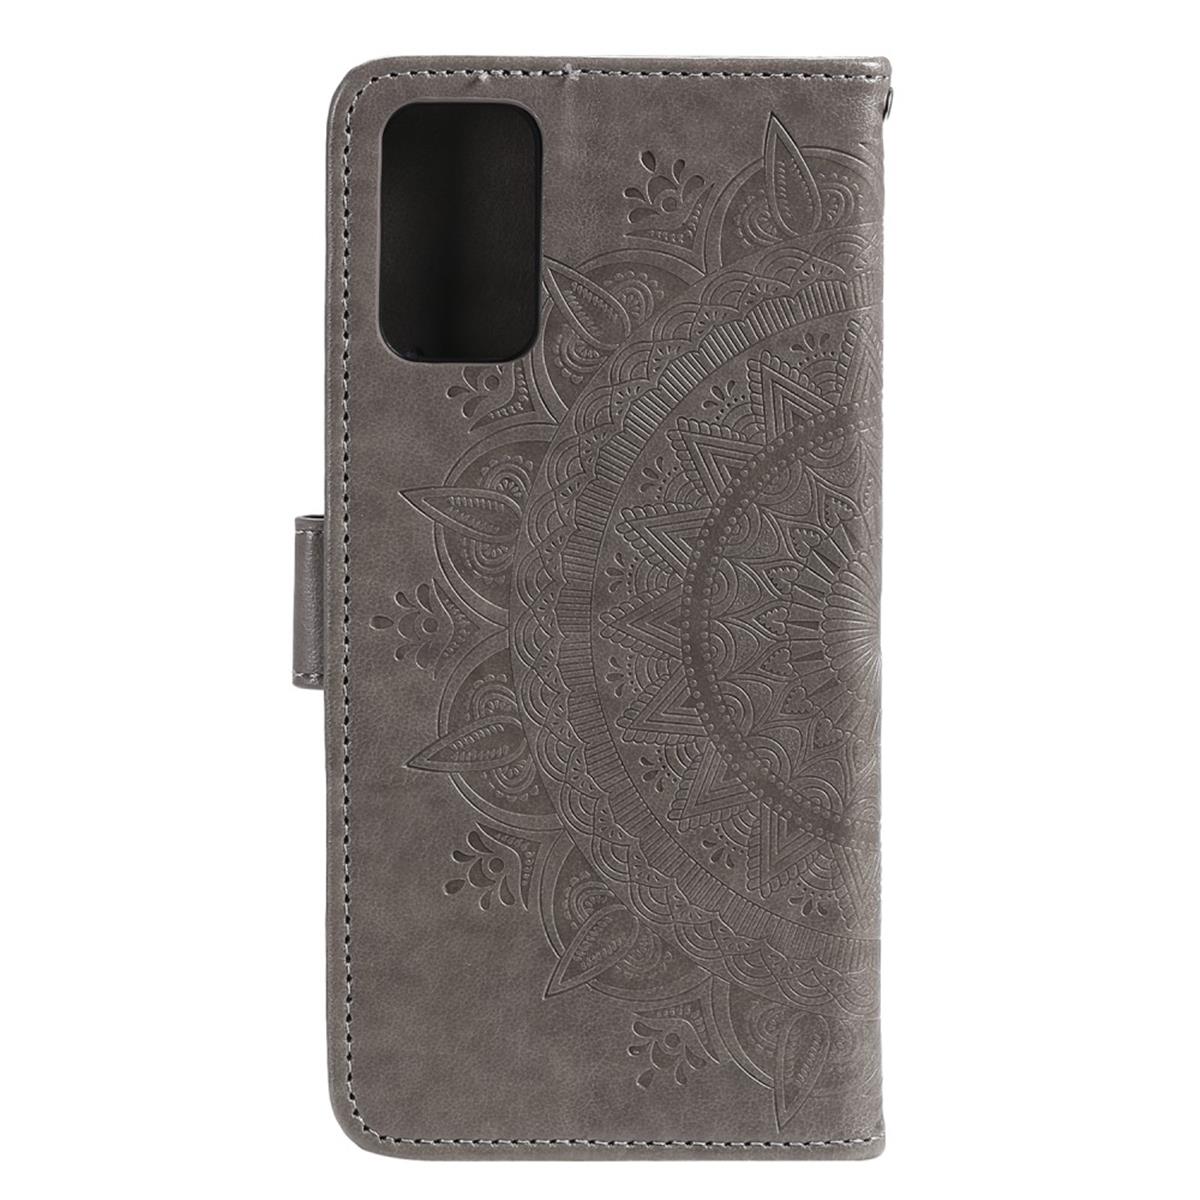 Hülle für Samsung Galaxy A02s Handy Tasche Flip Case Cover Etui Mandala Grau